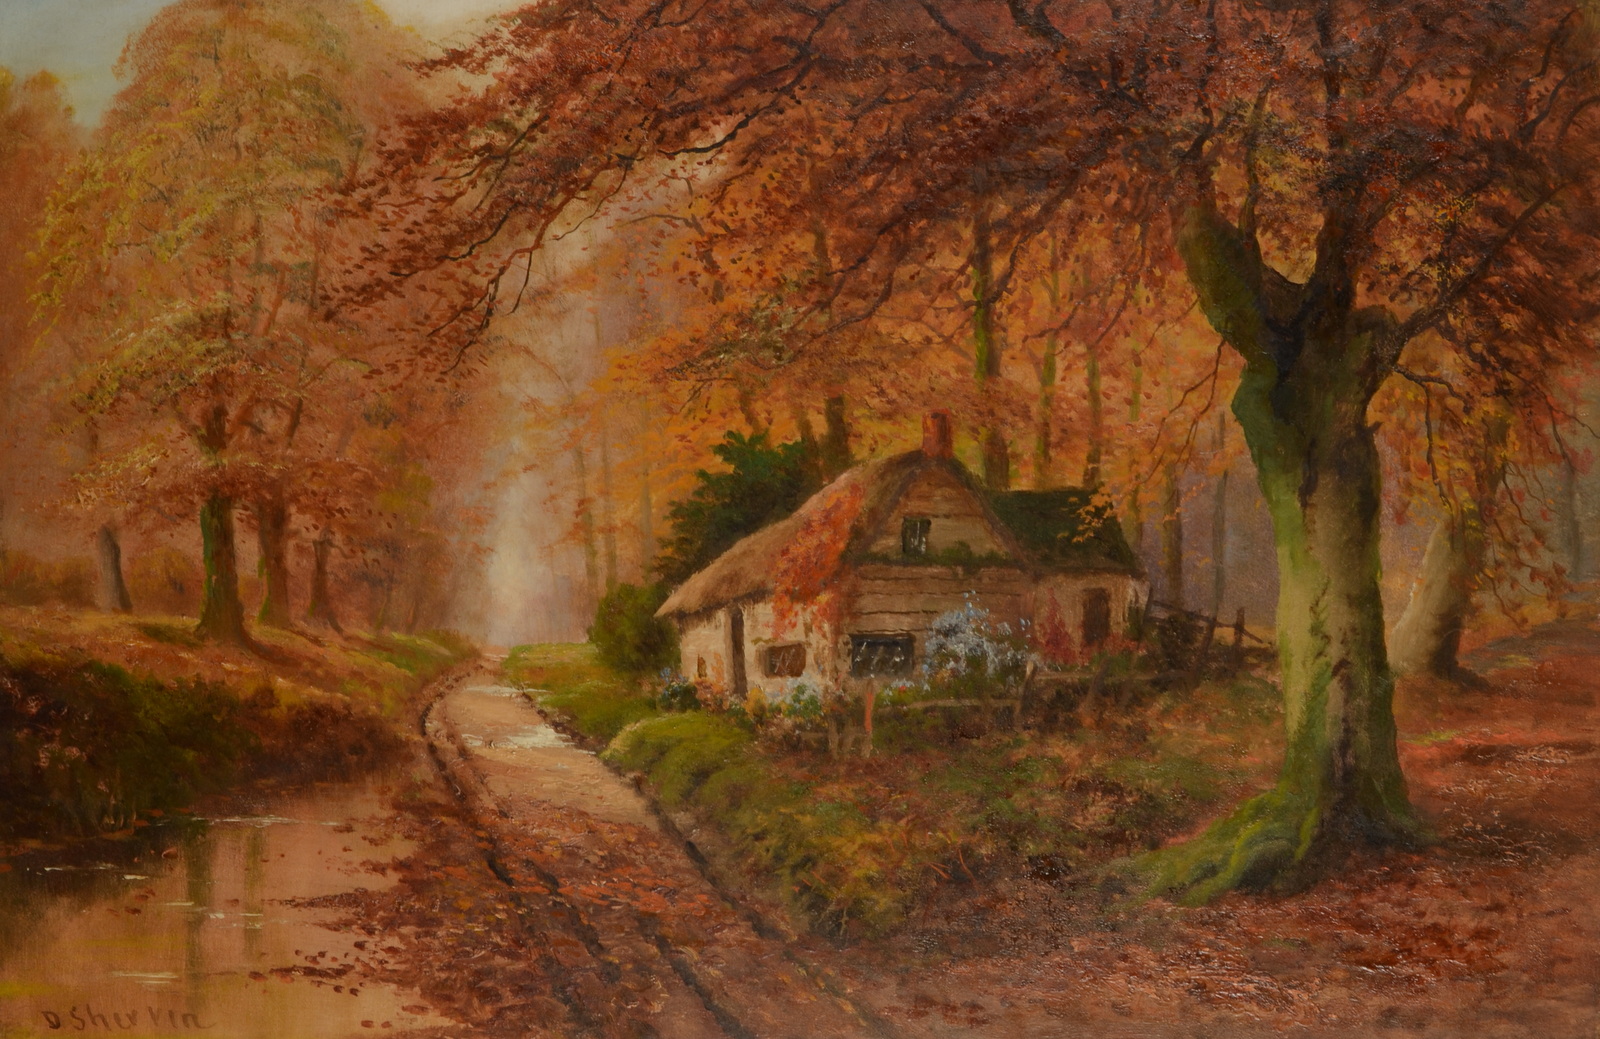 DANIEL SHERRIN Autumn Landscape Oil on canvas Signed 61 x 92cm